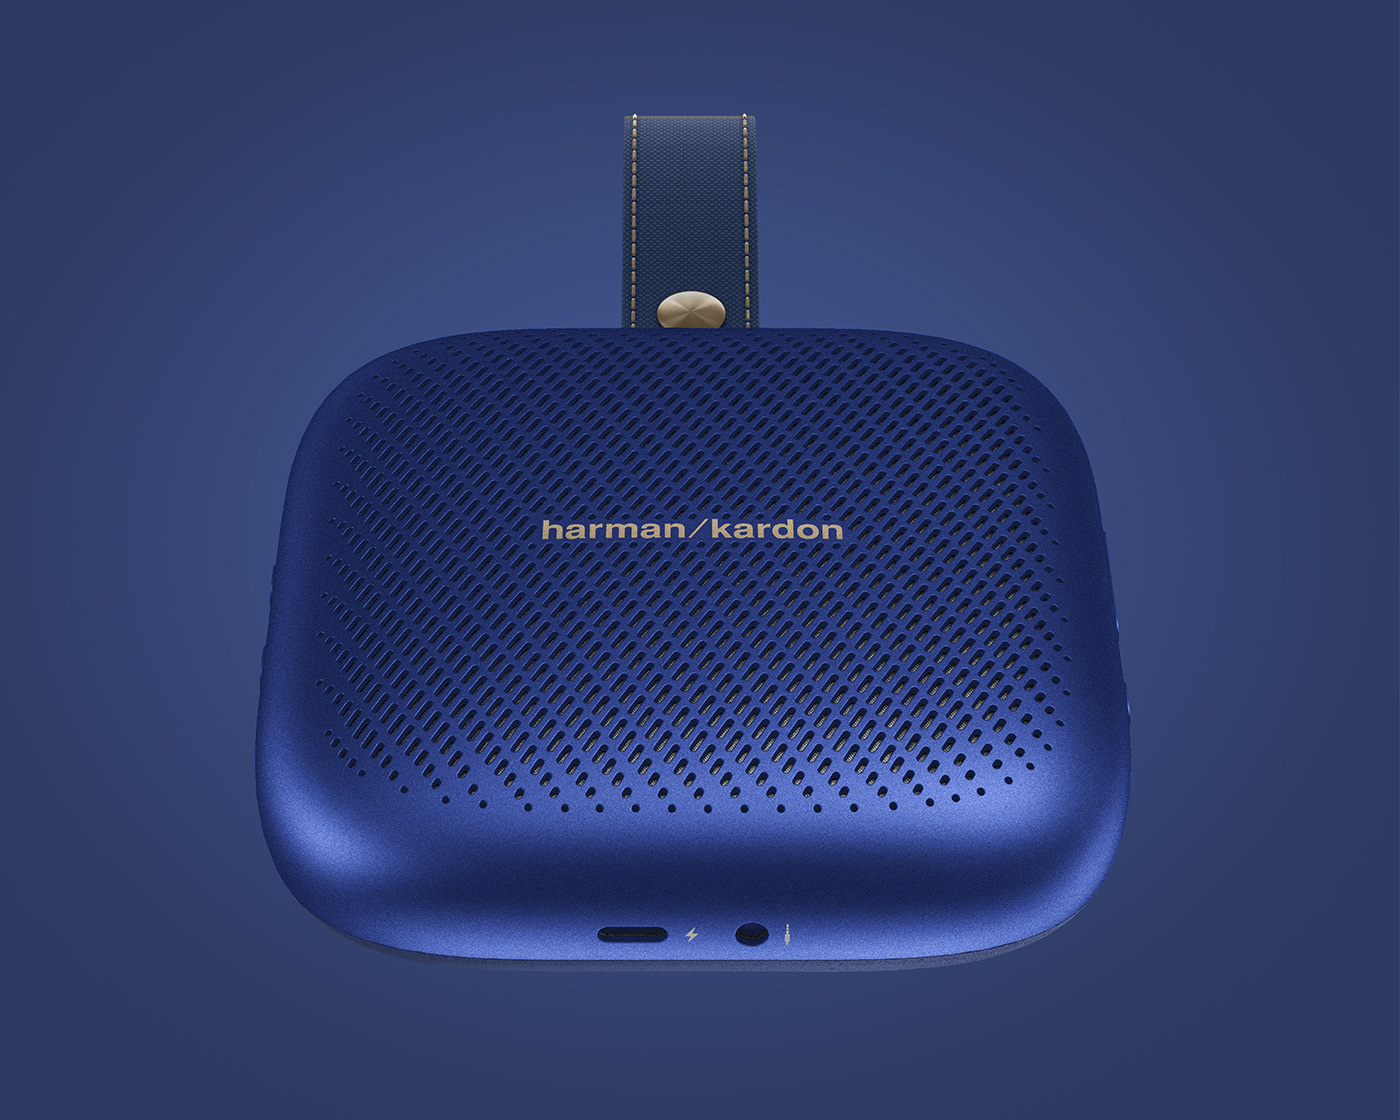 Audio bluetooth Harman Harman Kardon industrial design  music NEO portable premium speaker